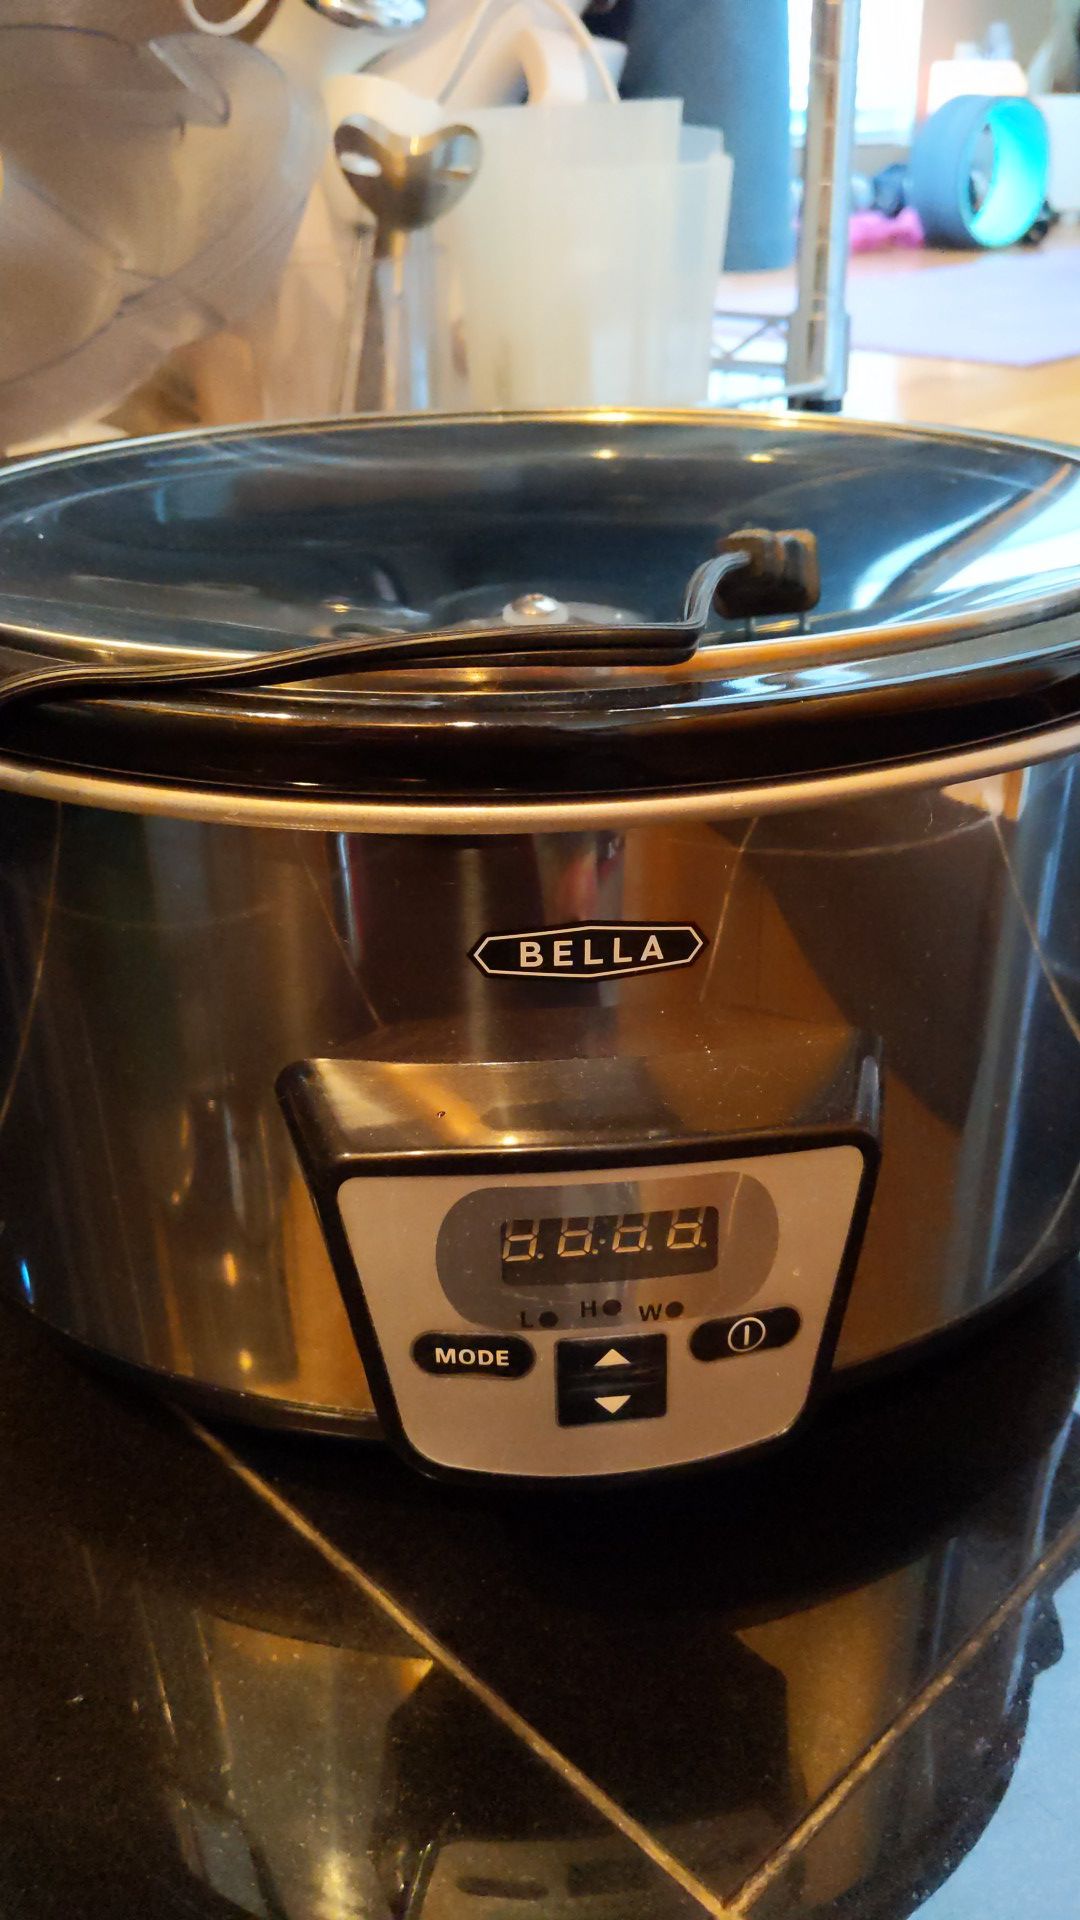 Bella slow cooker - new